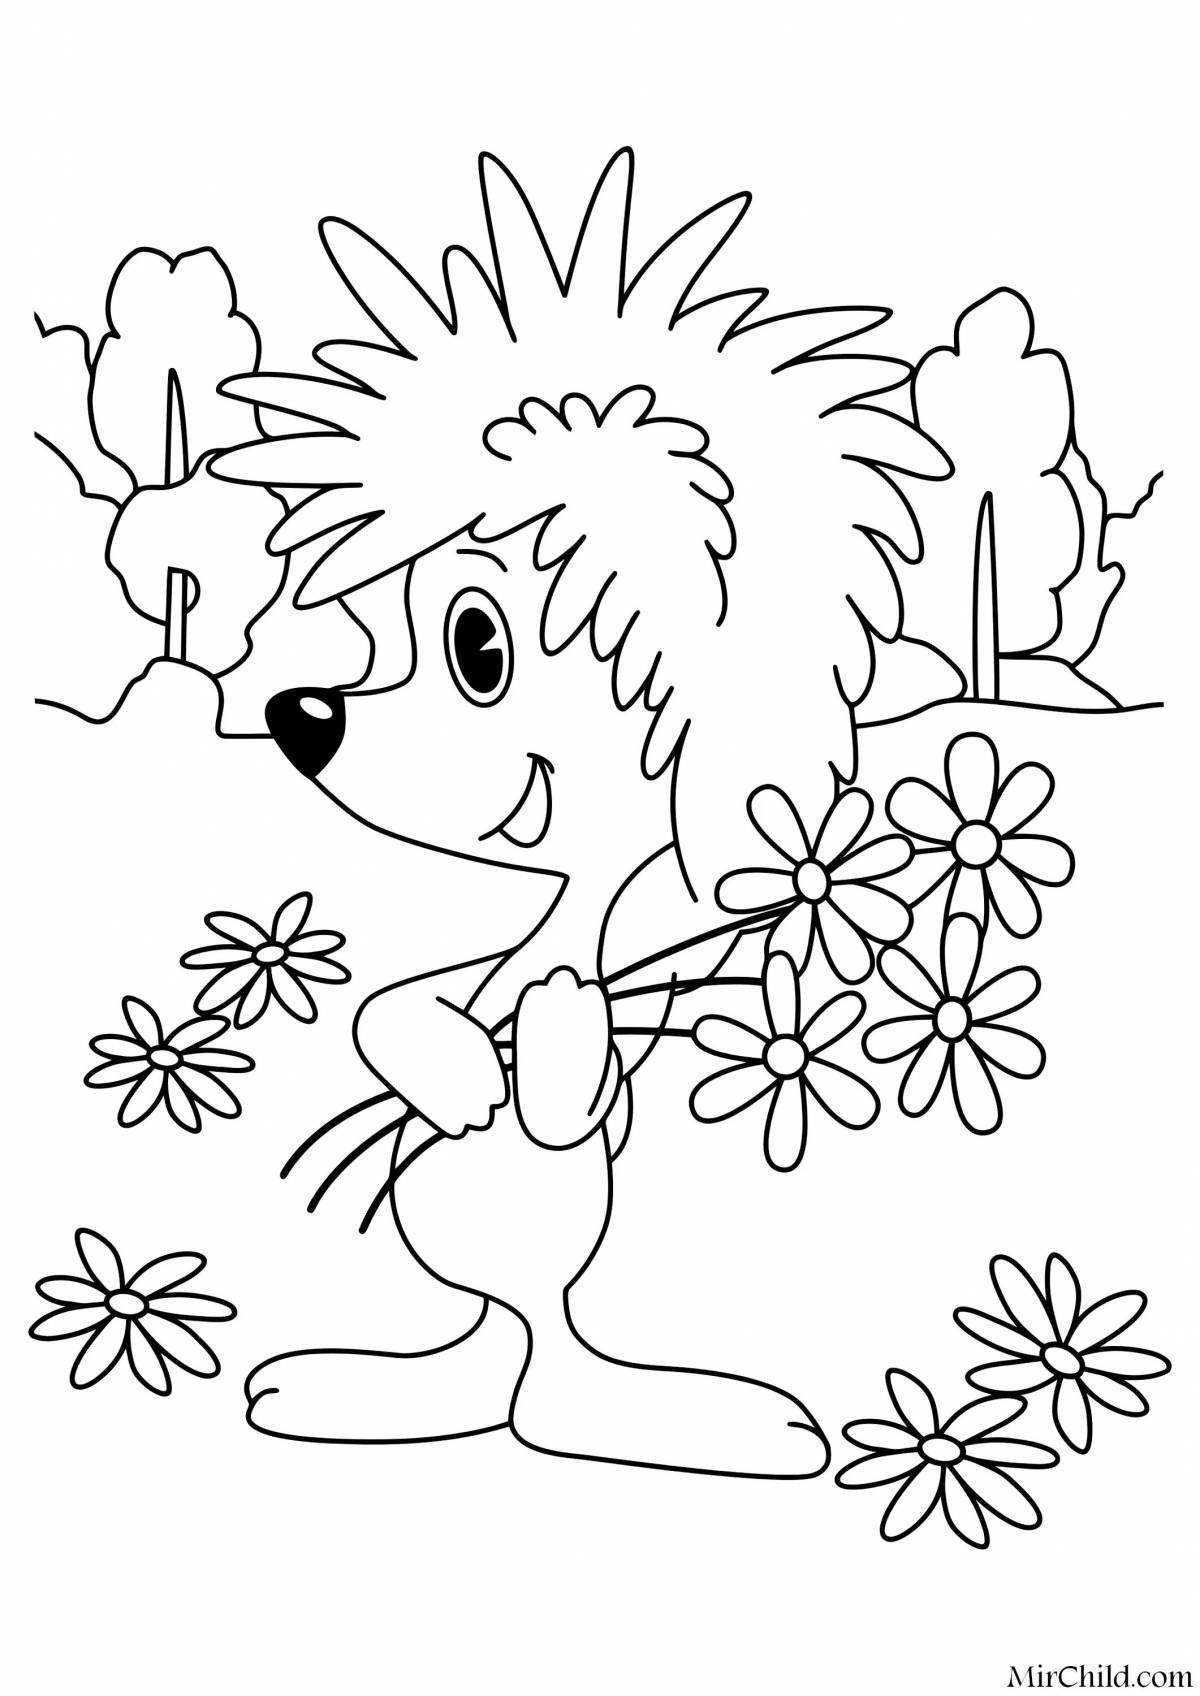 Joyful coloring hedgehog and teddy bear